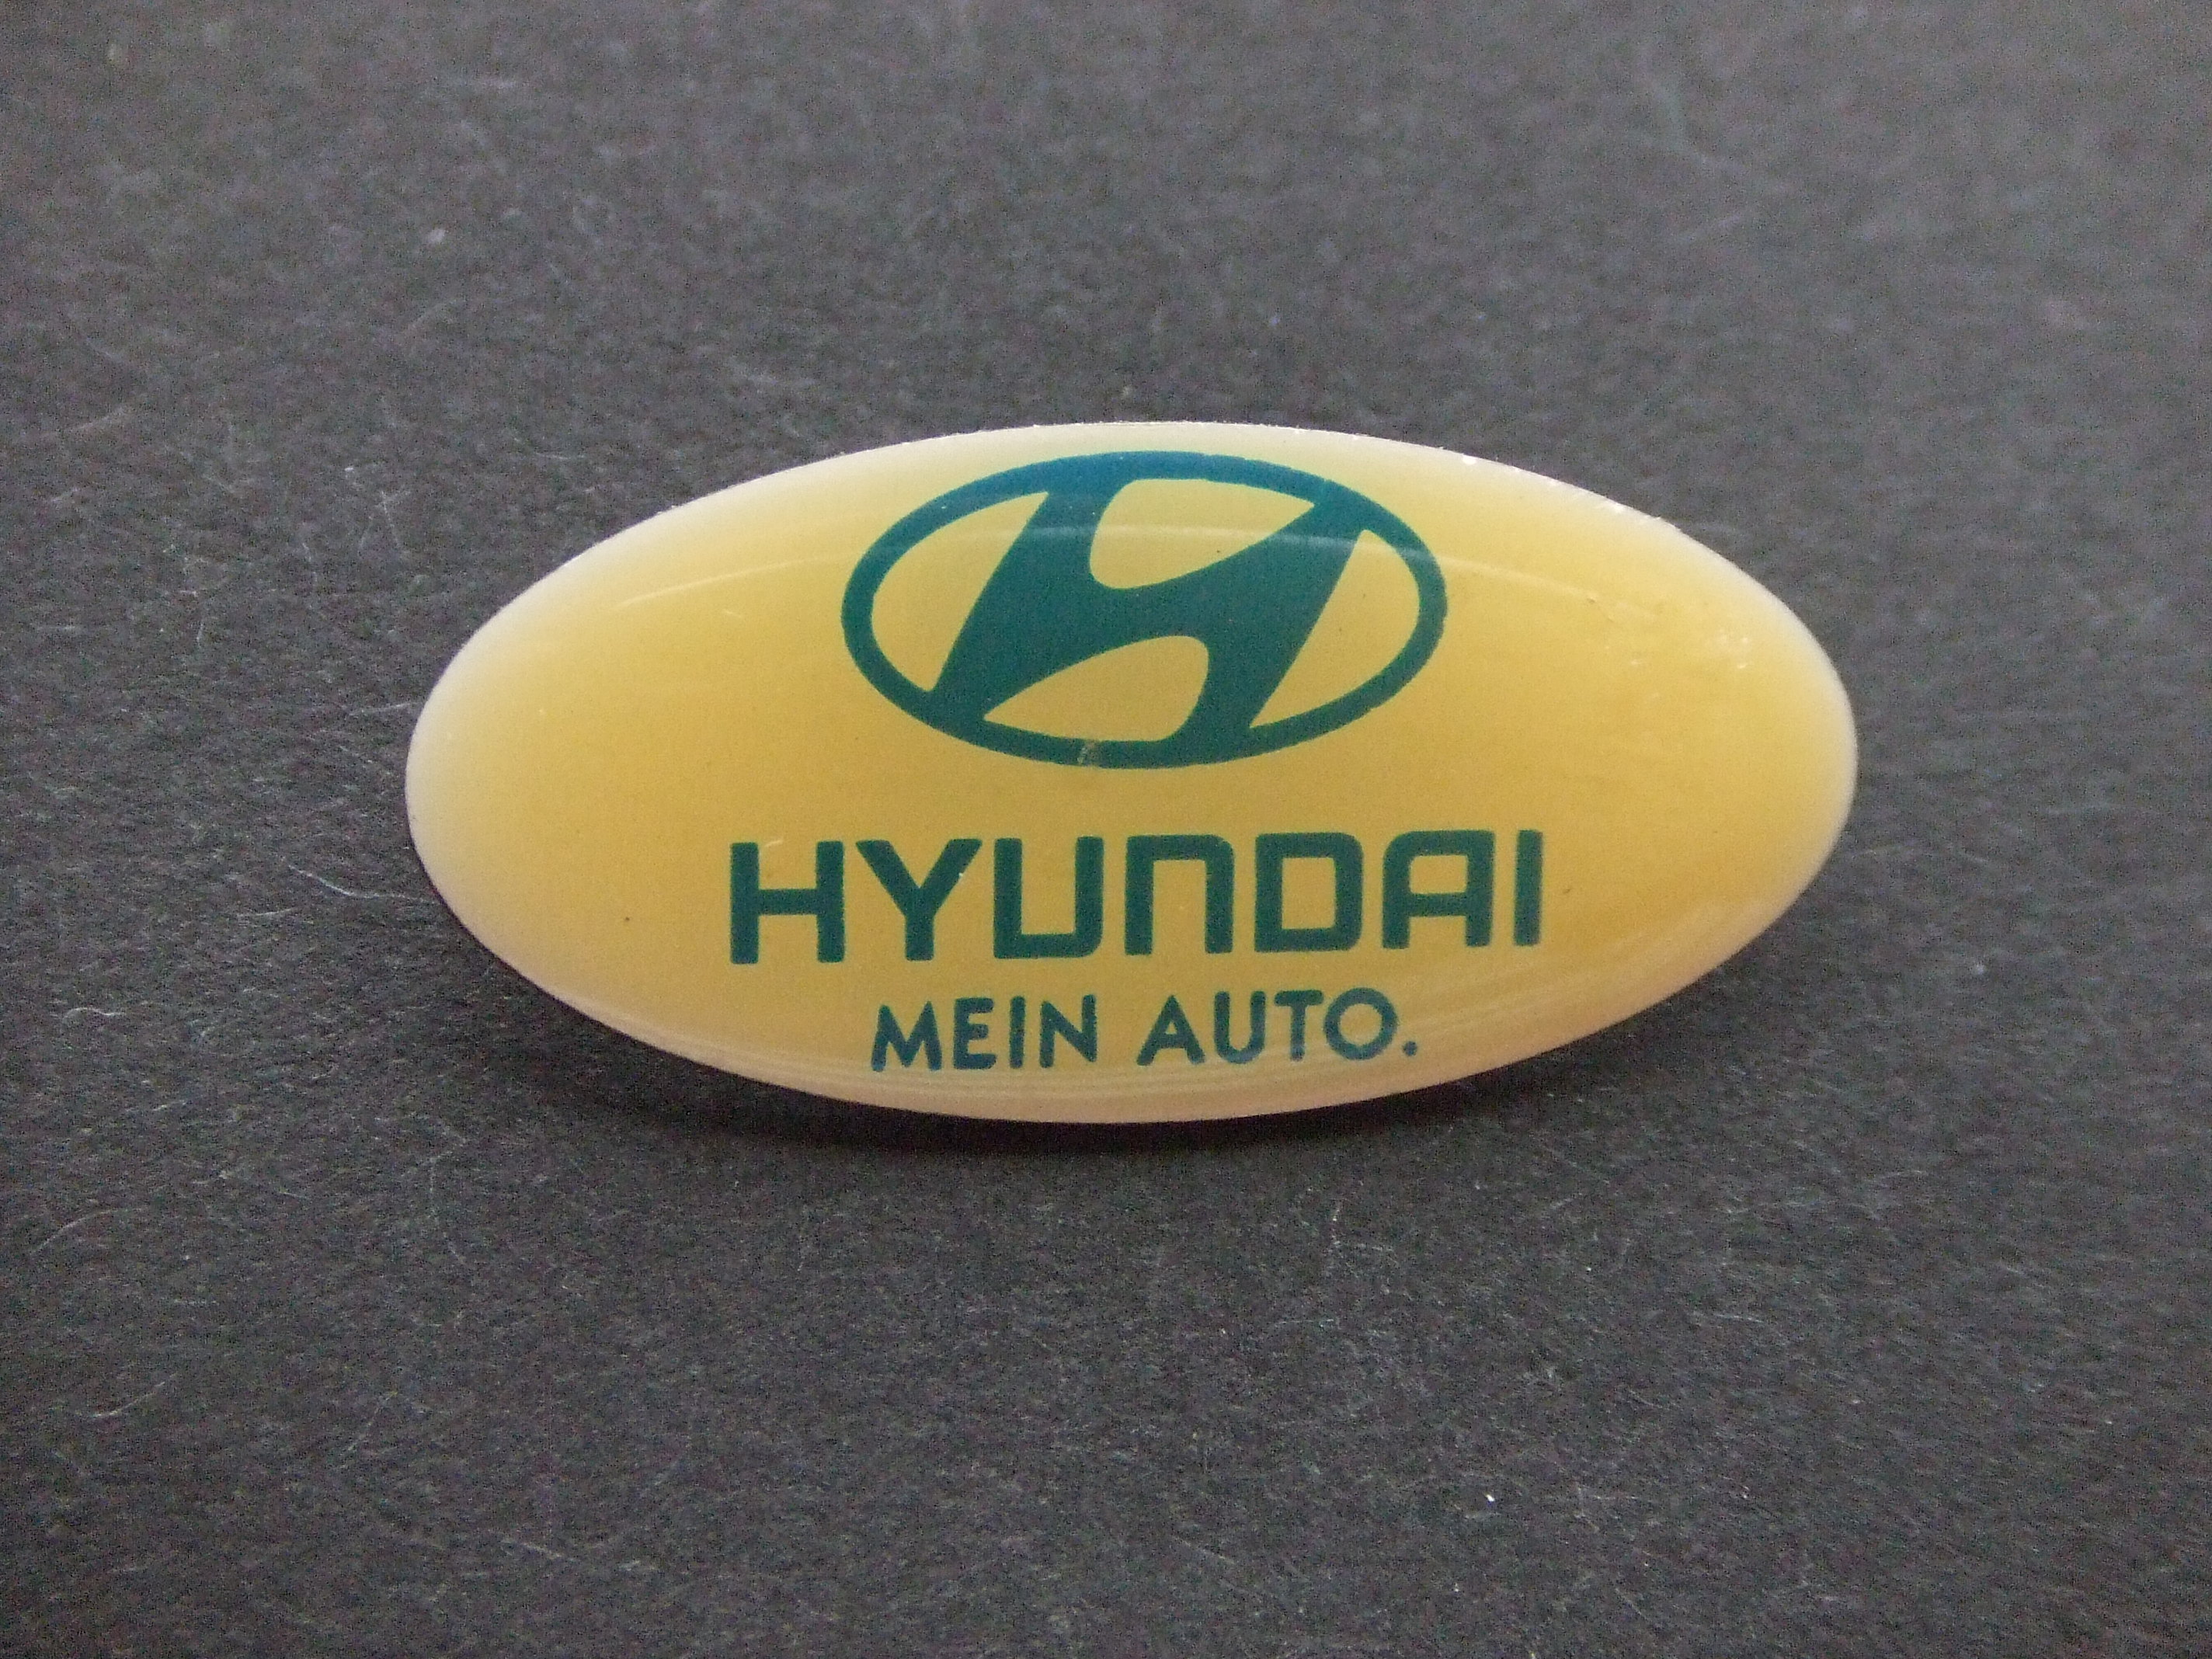 Hyundai autofabrikant uit Zuid-Korea mijn auto